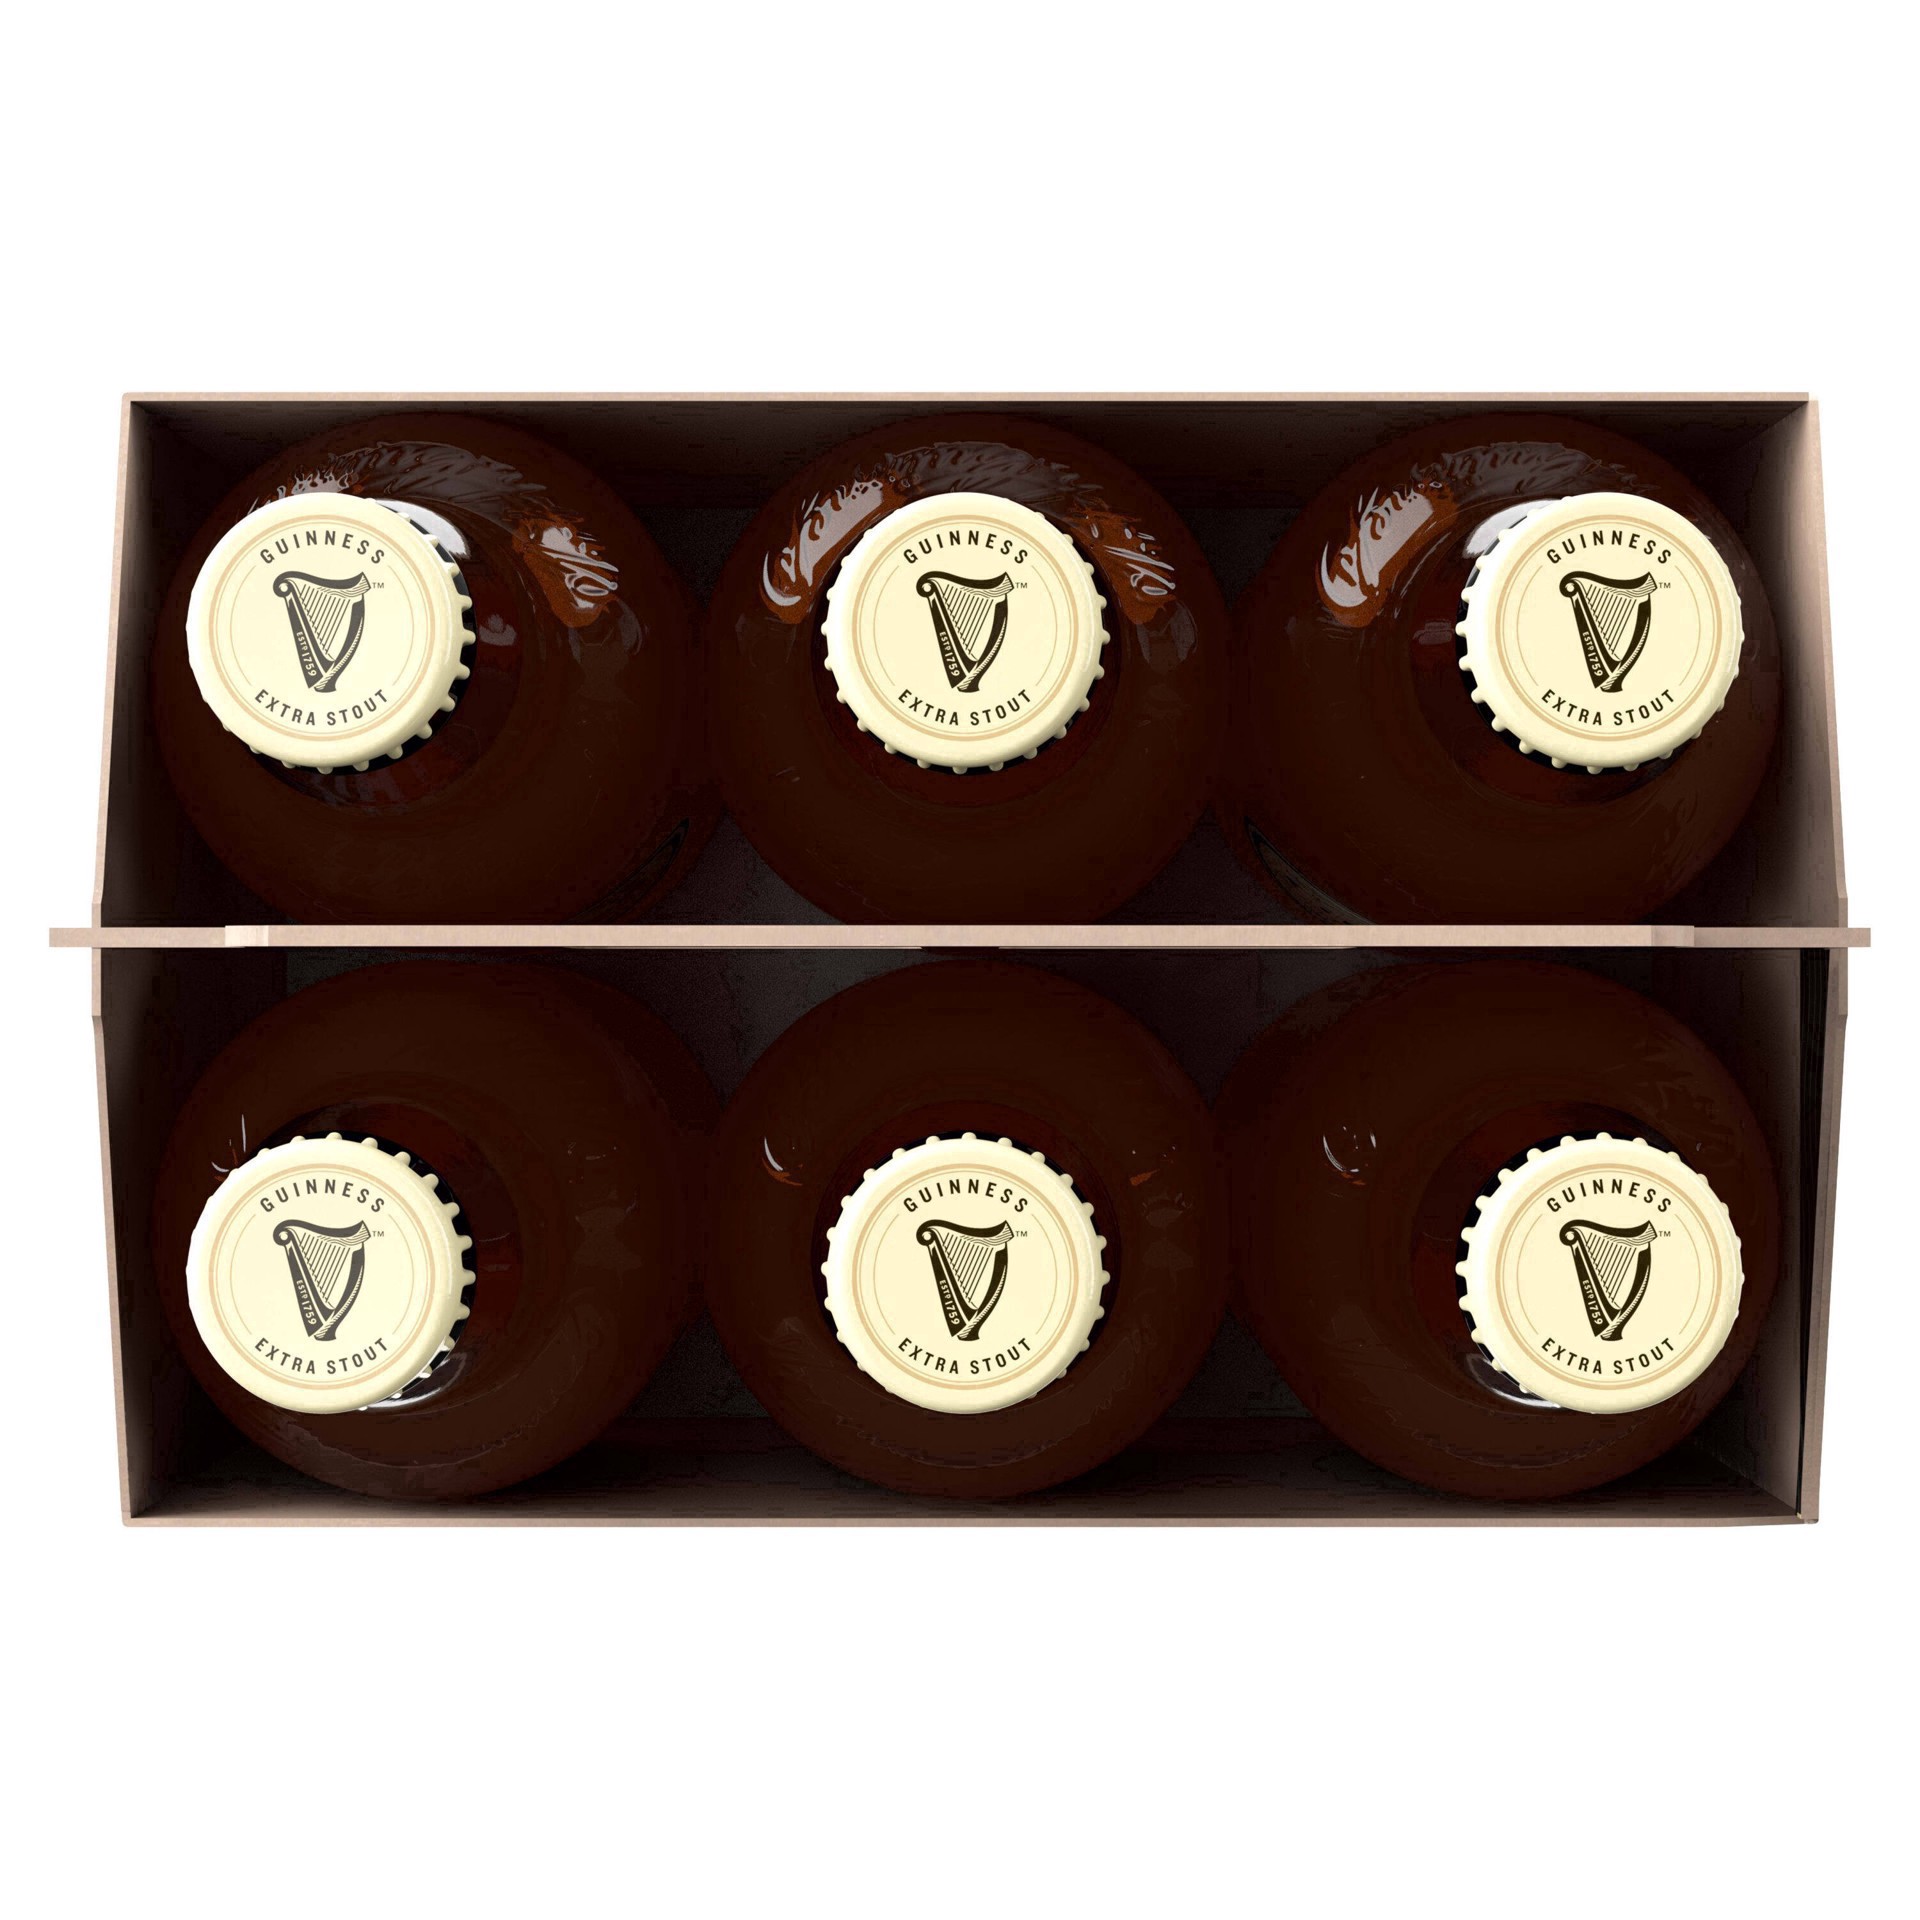 slide 46 of 89, Guinness Extra Stout Import Beer, 11.2 fl oz, 6 Pack Bottles, 5.6% ABV, 11.2 fl oz